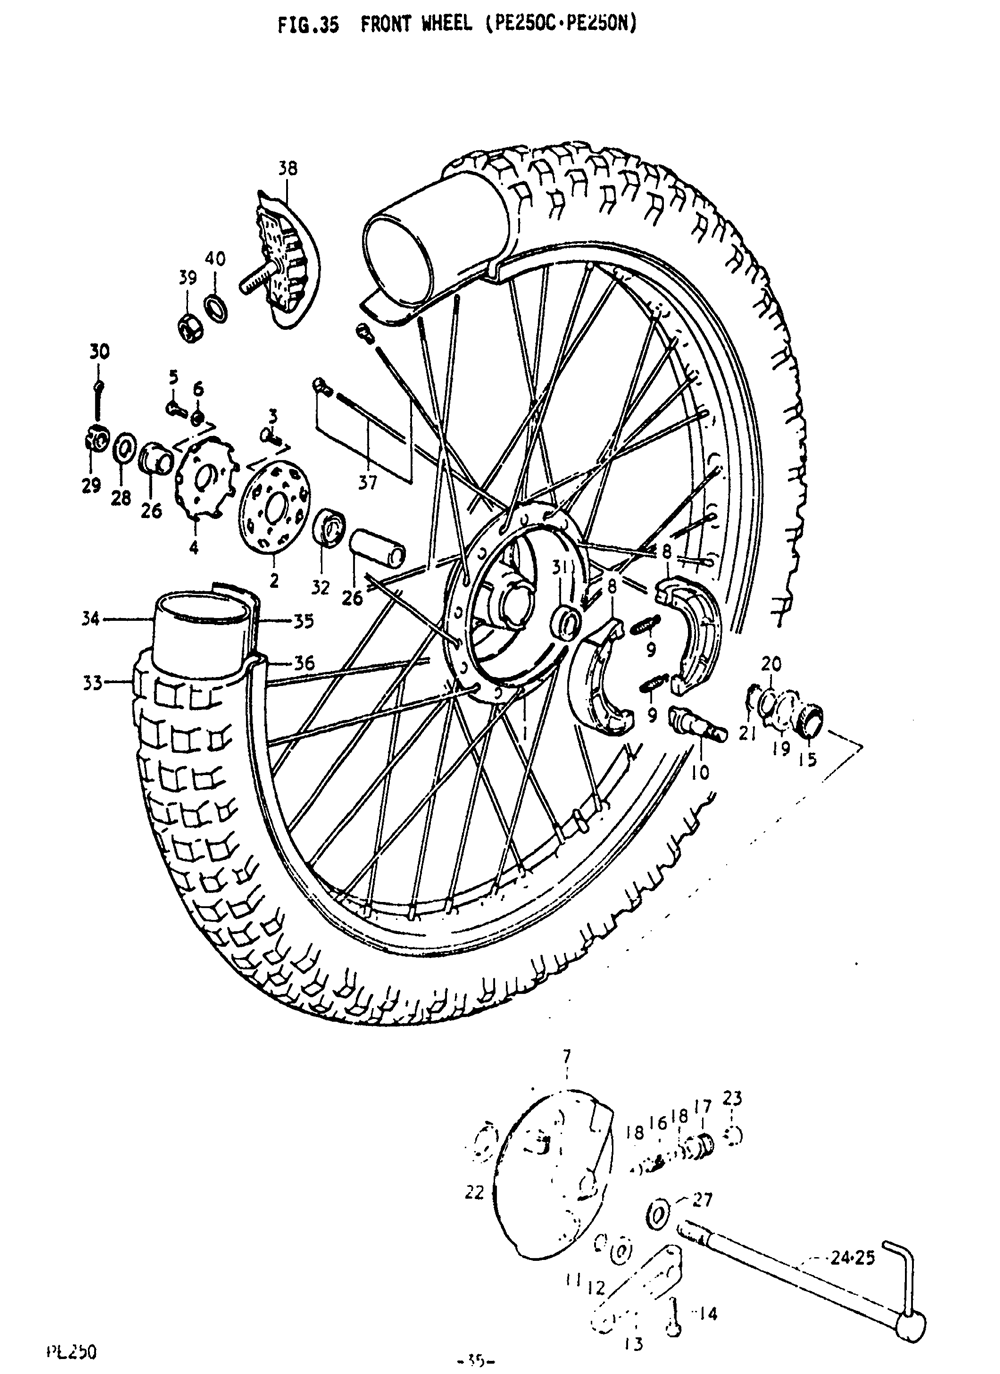 Front wheel (pe250c .pe250n)